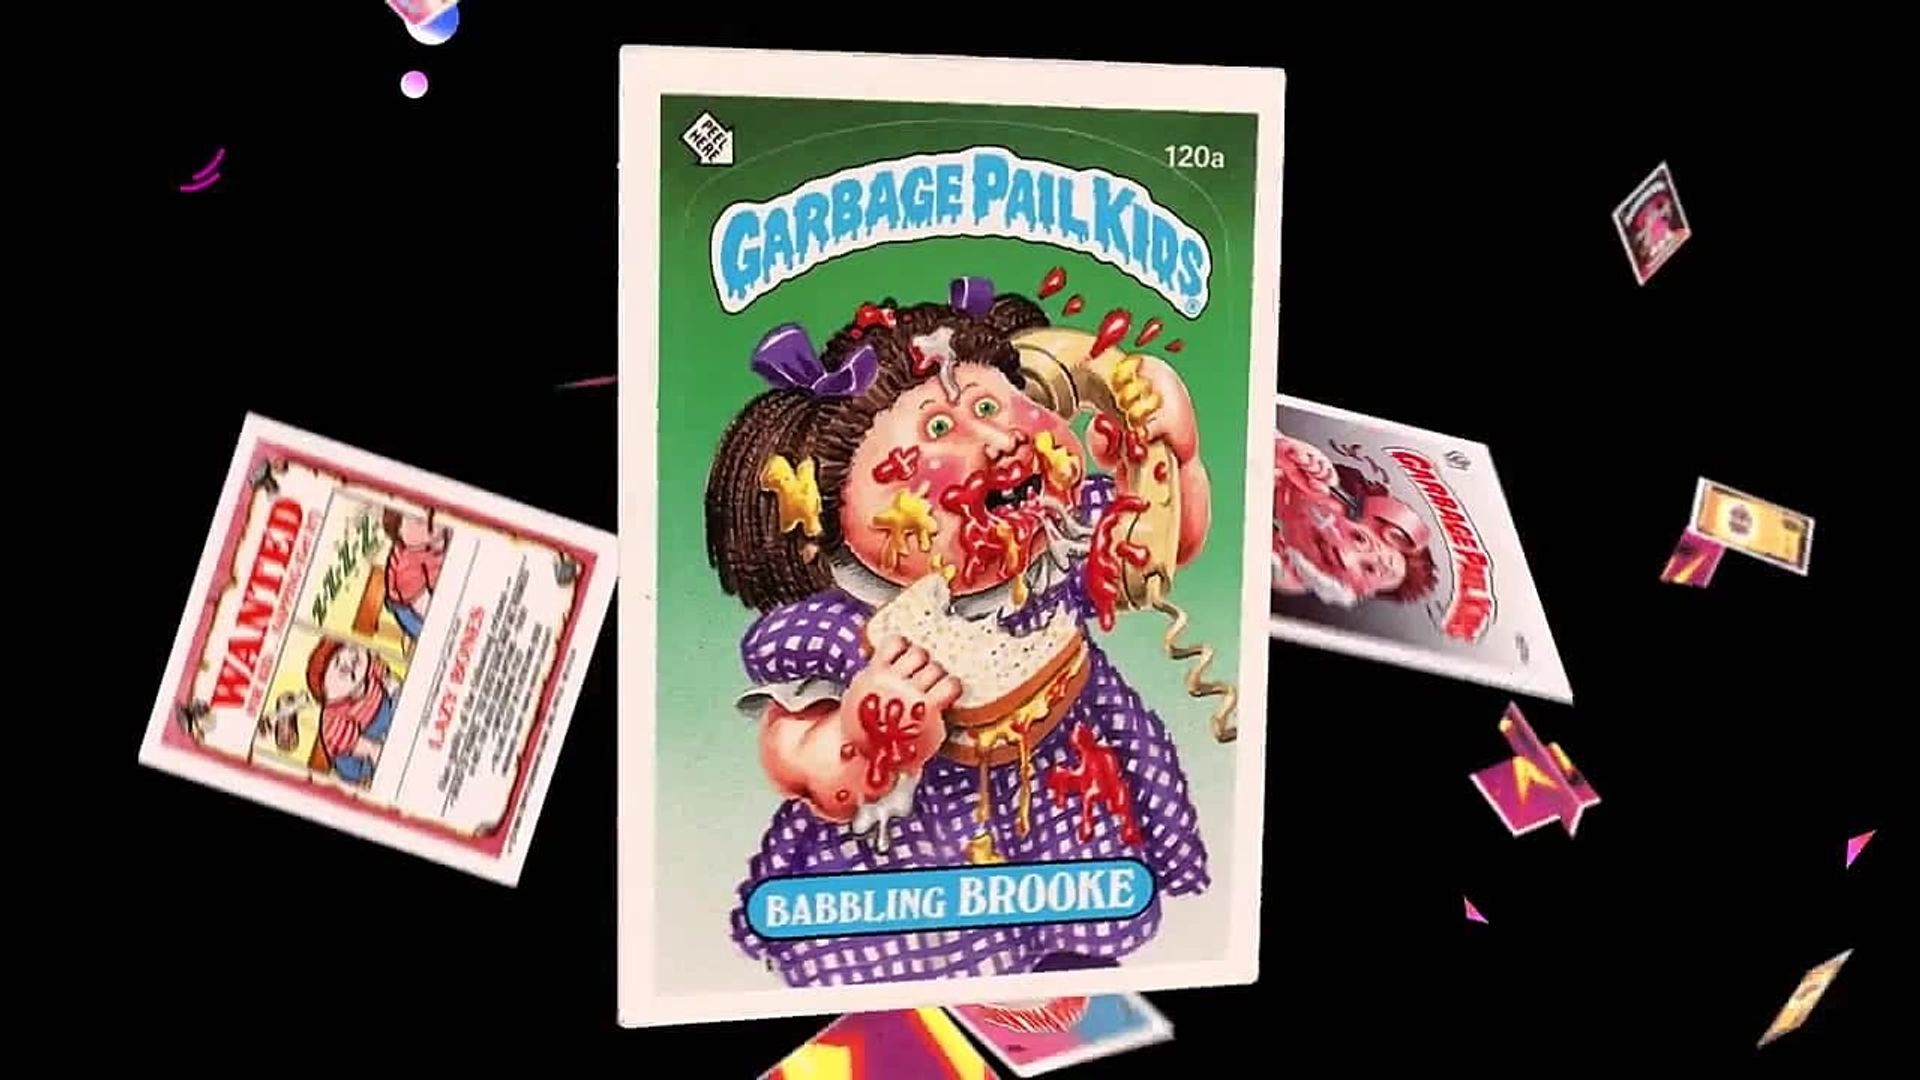 30 Years of Garbage: The Garbage Pail Kids Story Backdrop